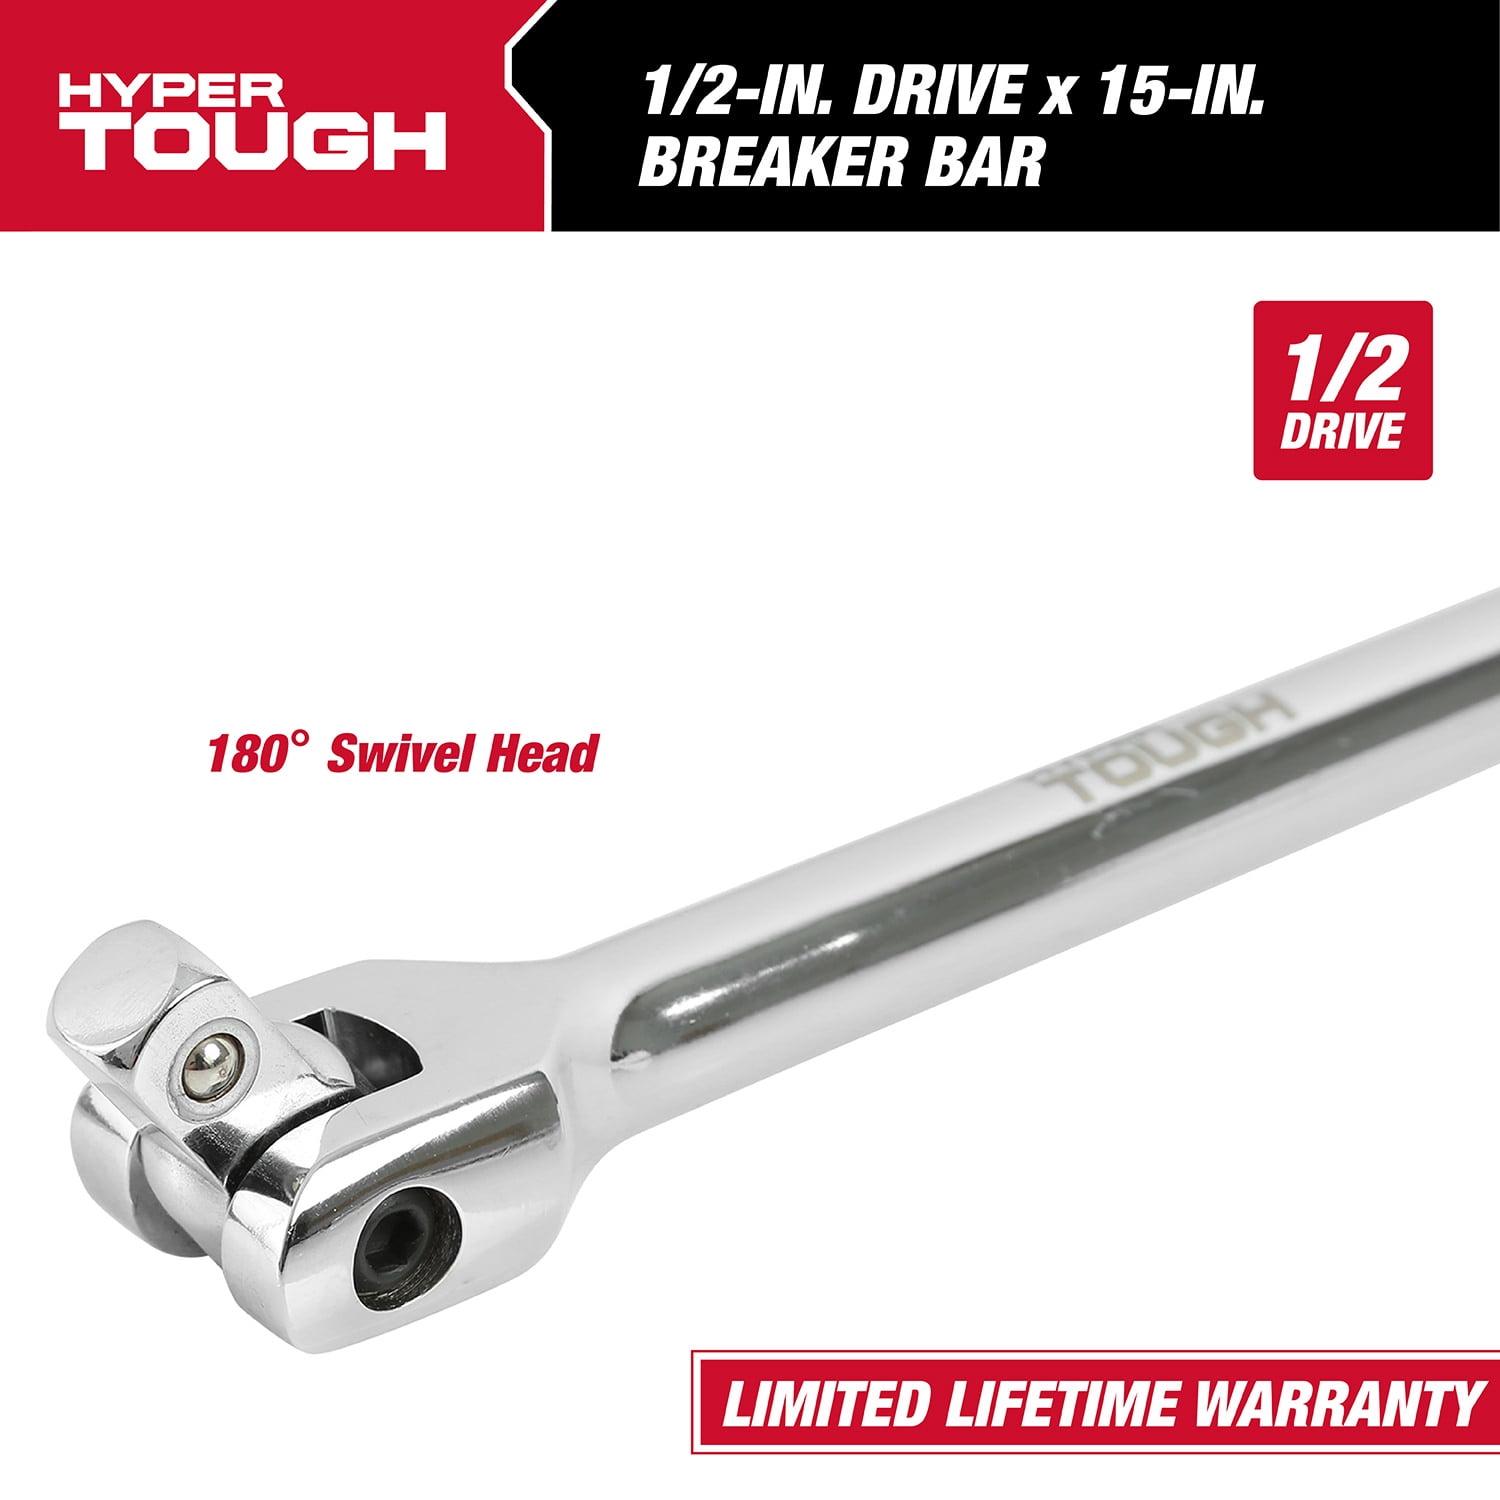 Power Bar Knuckle Bar 15" Wrench Flexi Head TE717 1/2" Drive Breaker Bar 